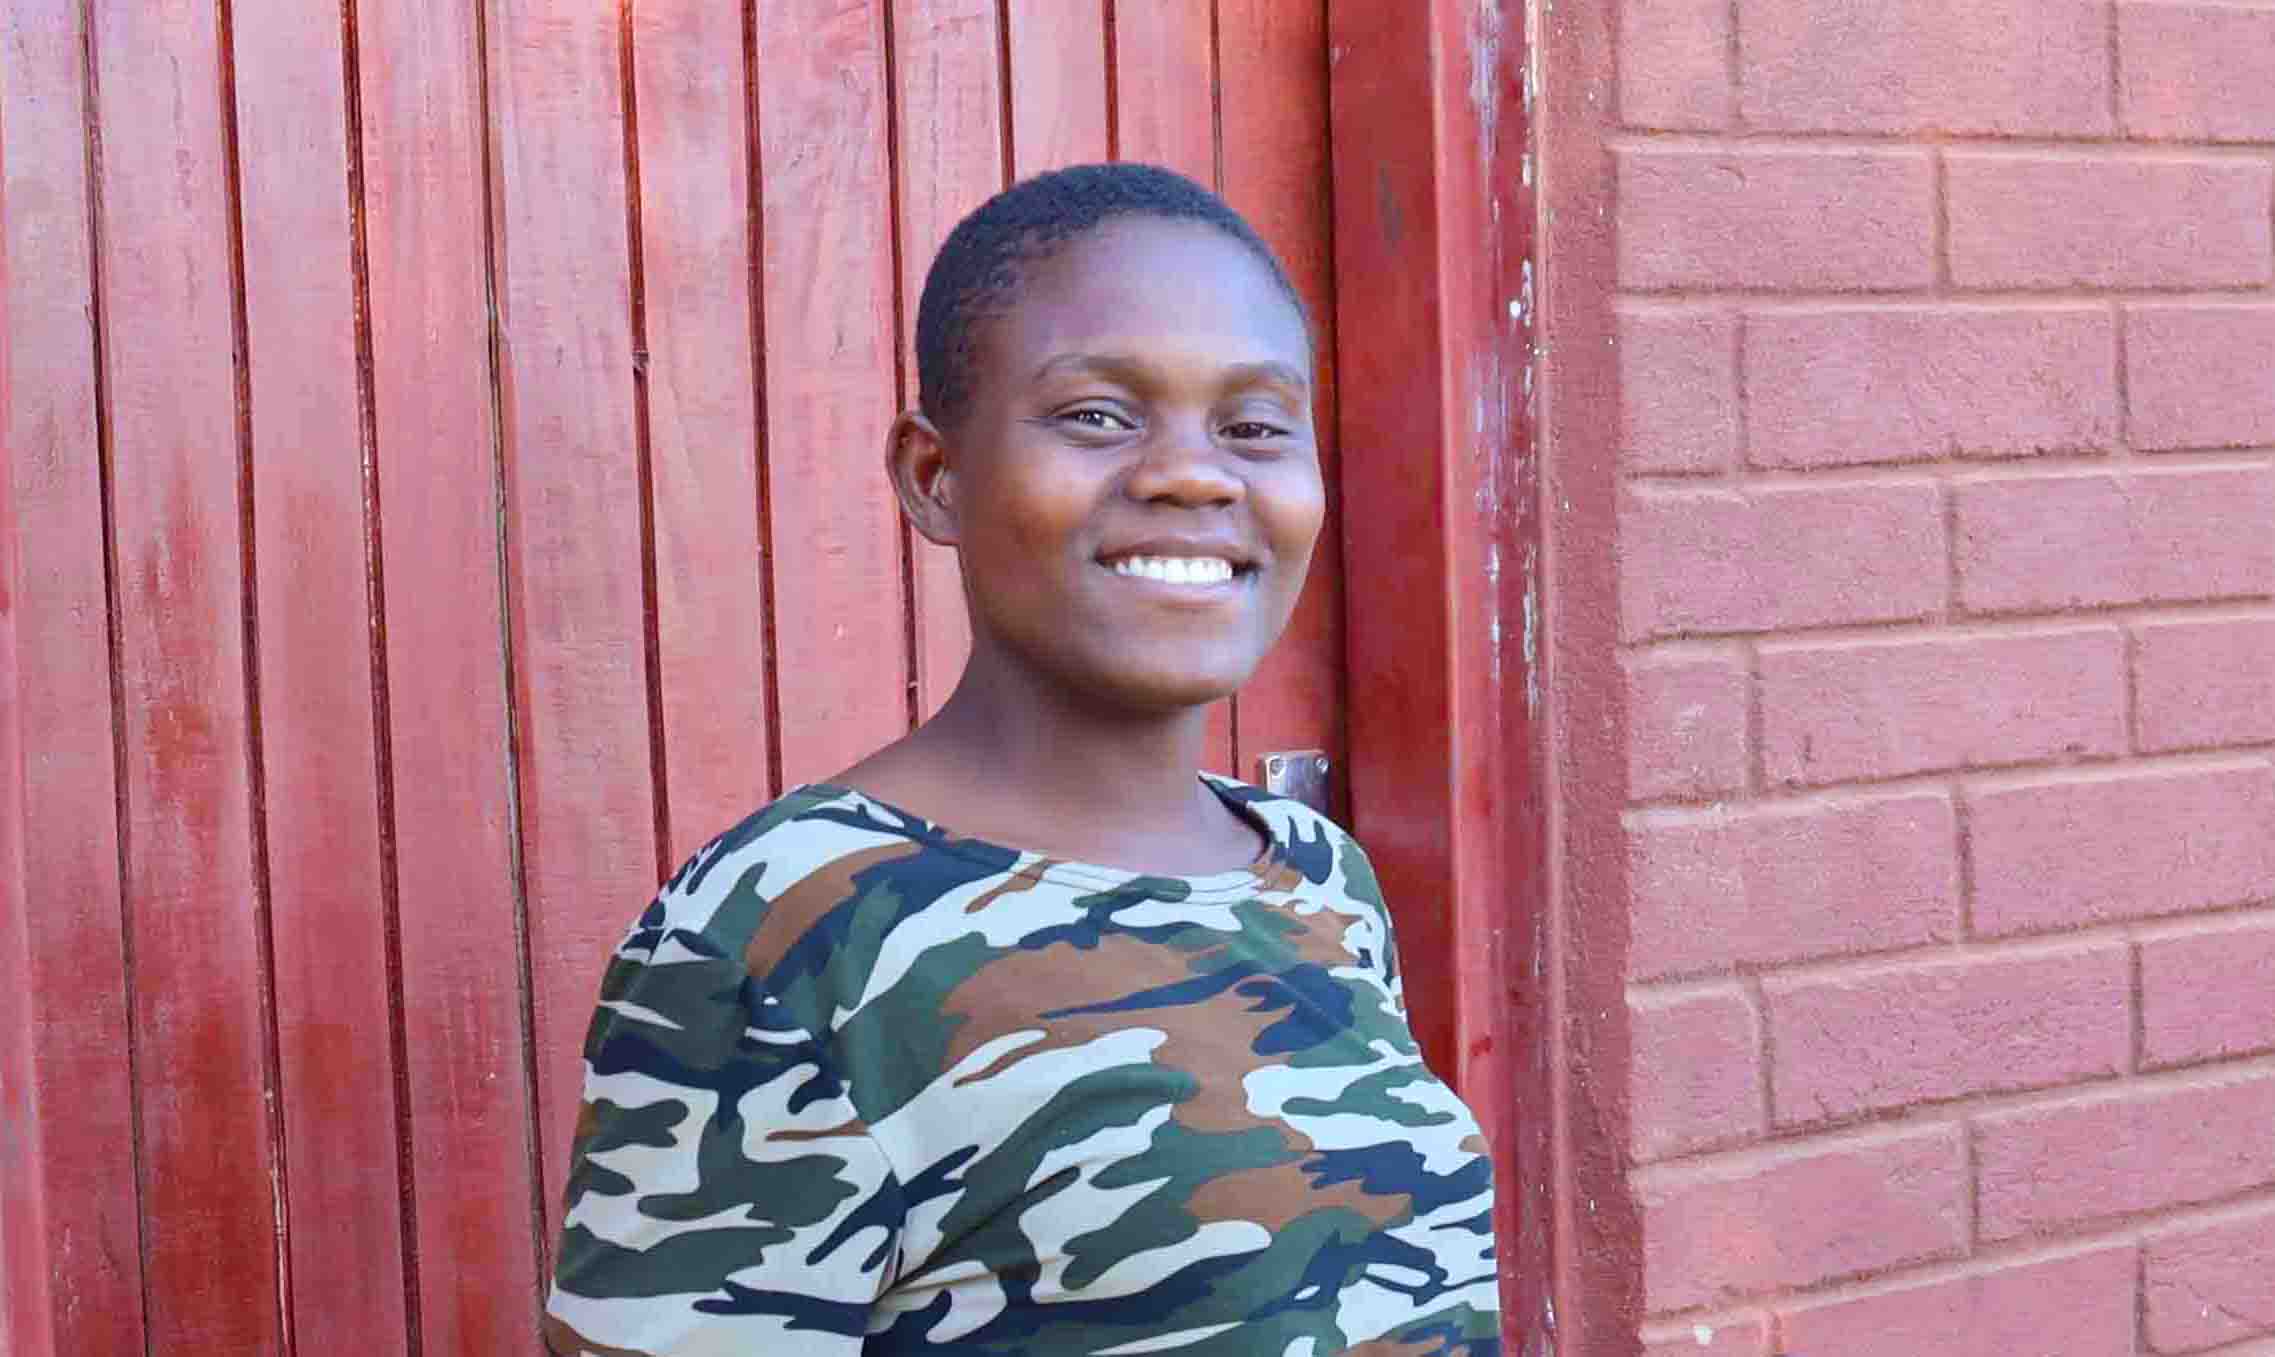 Jente smiler mot kamera utenfor bygg i Malawi